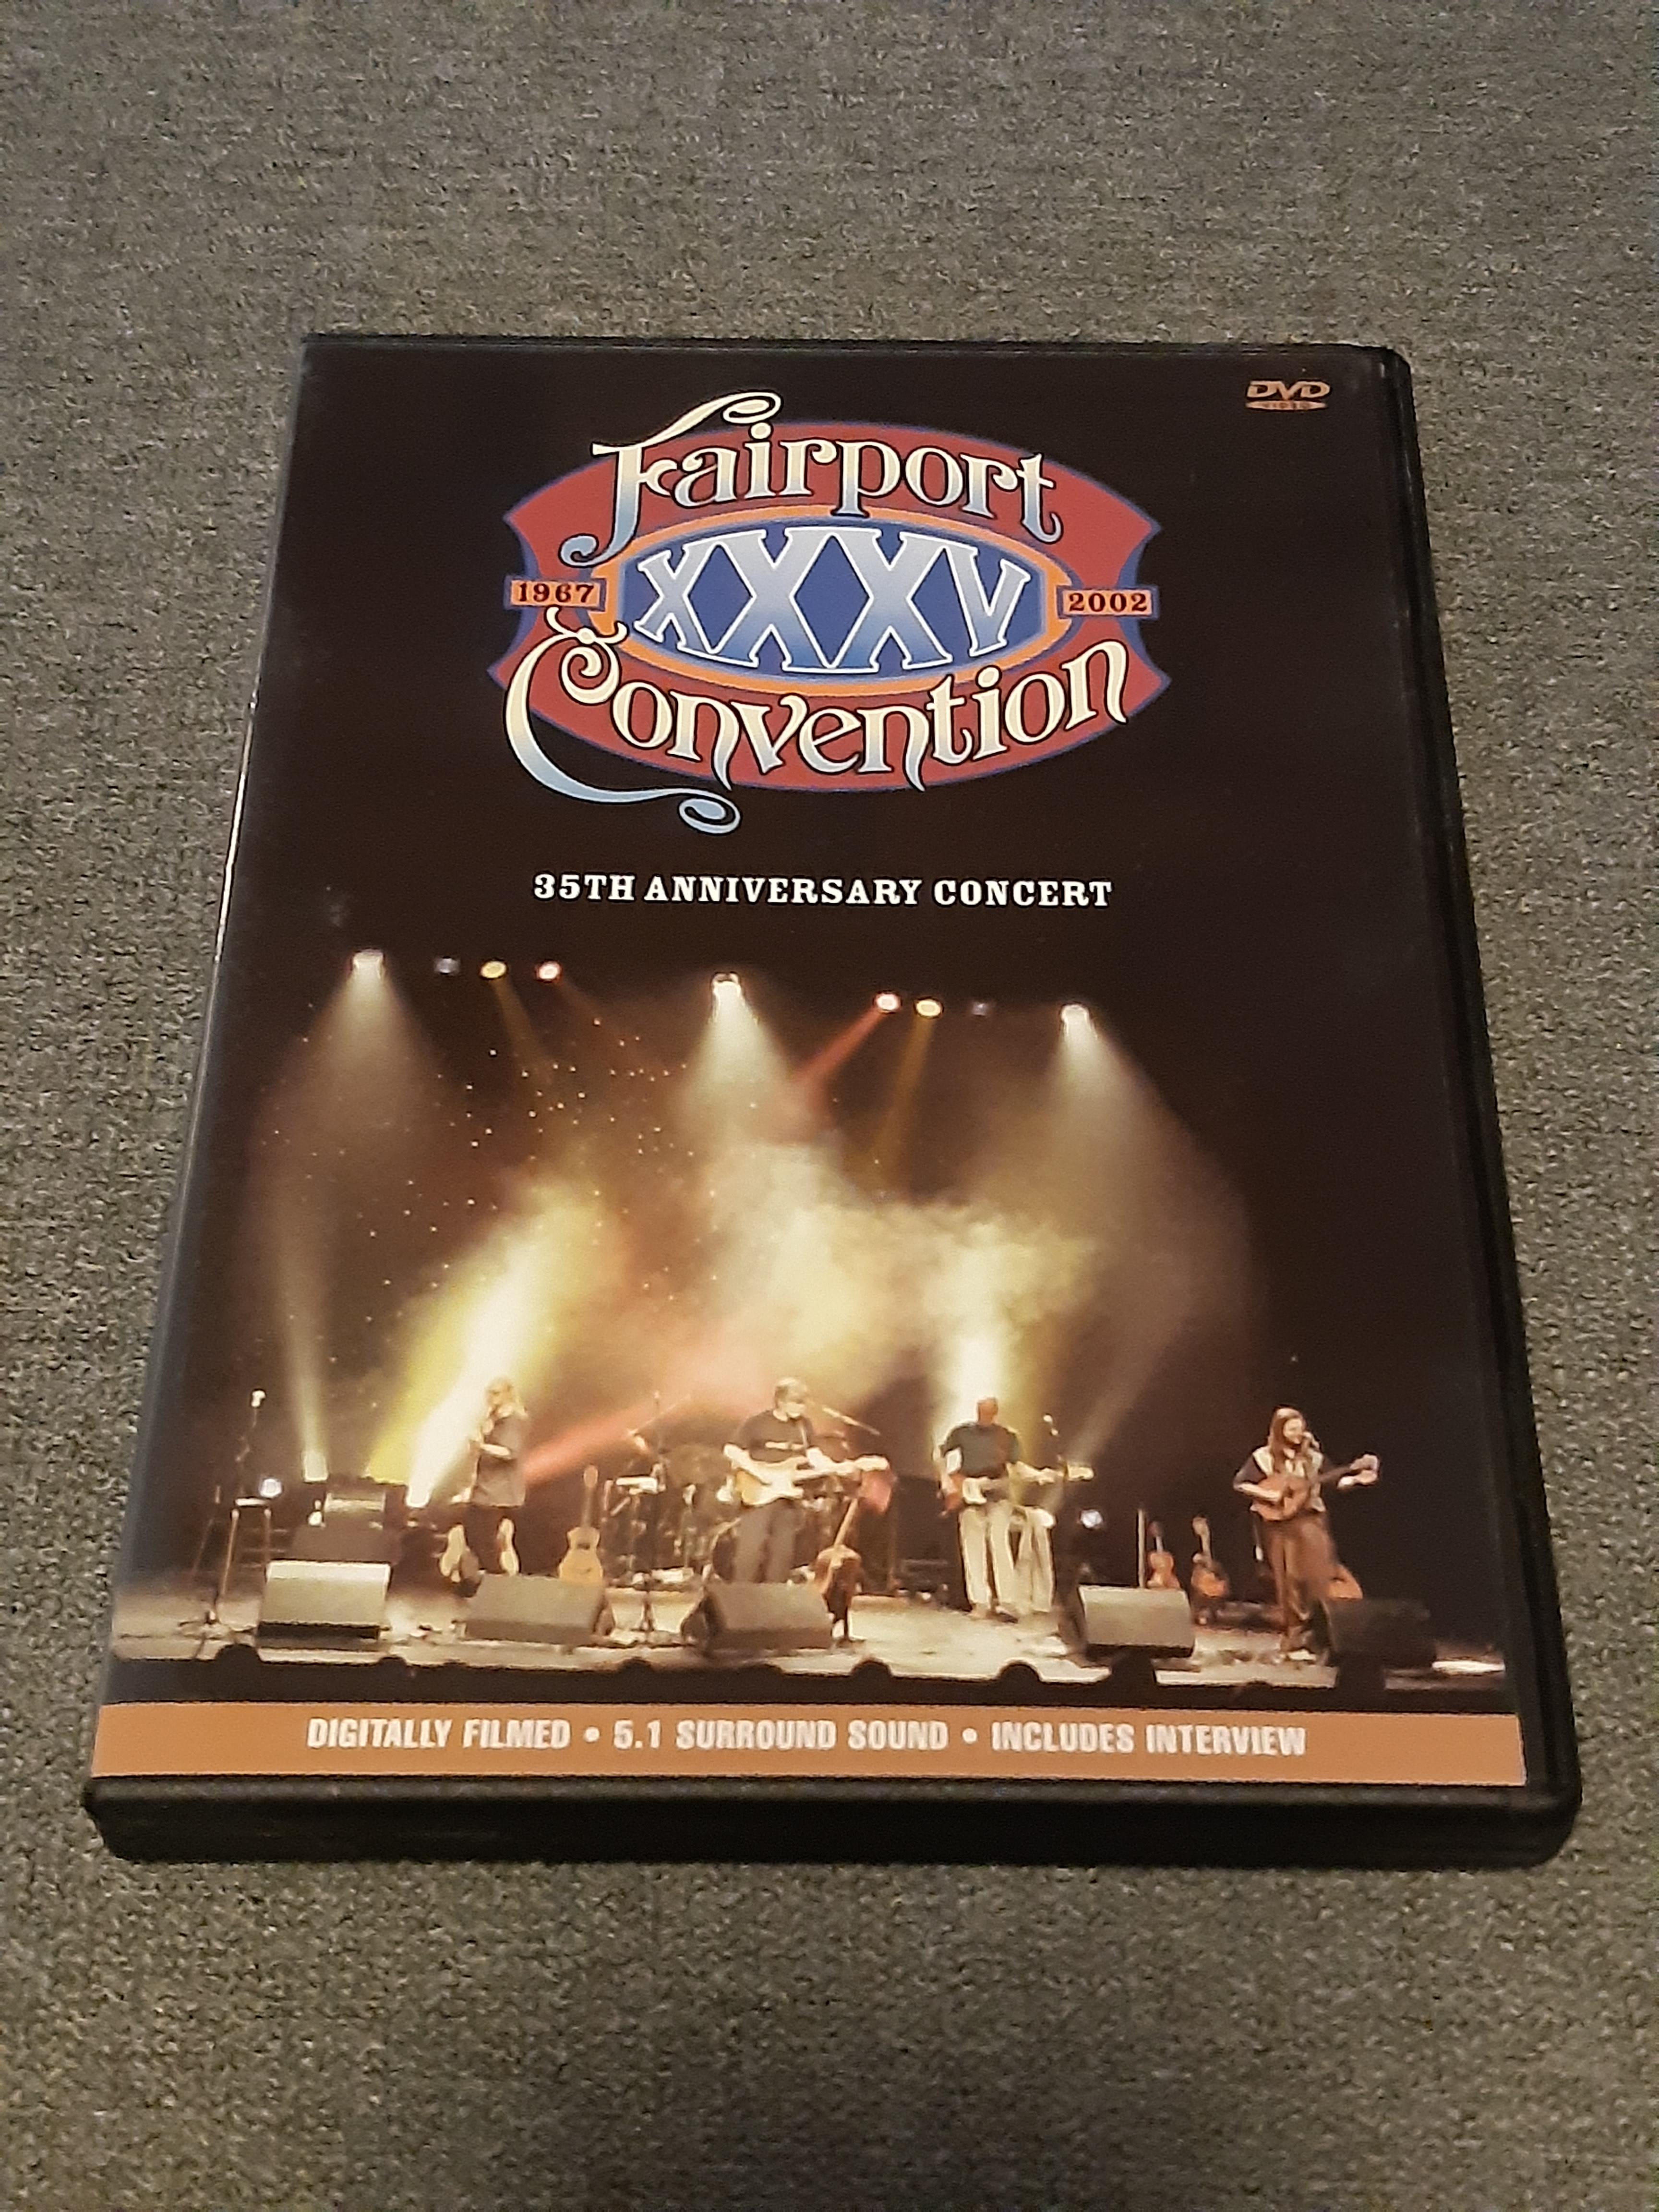 Fairport Convention - 35th Anniversary Concert - DVD (käytetty)